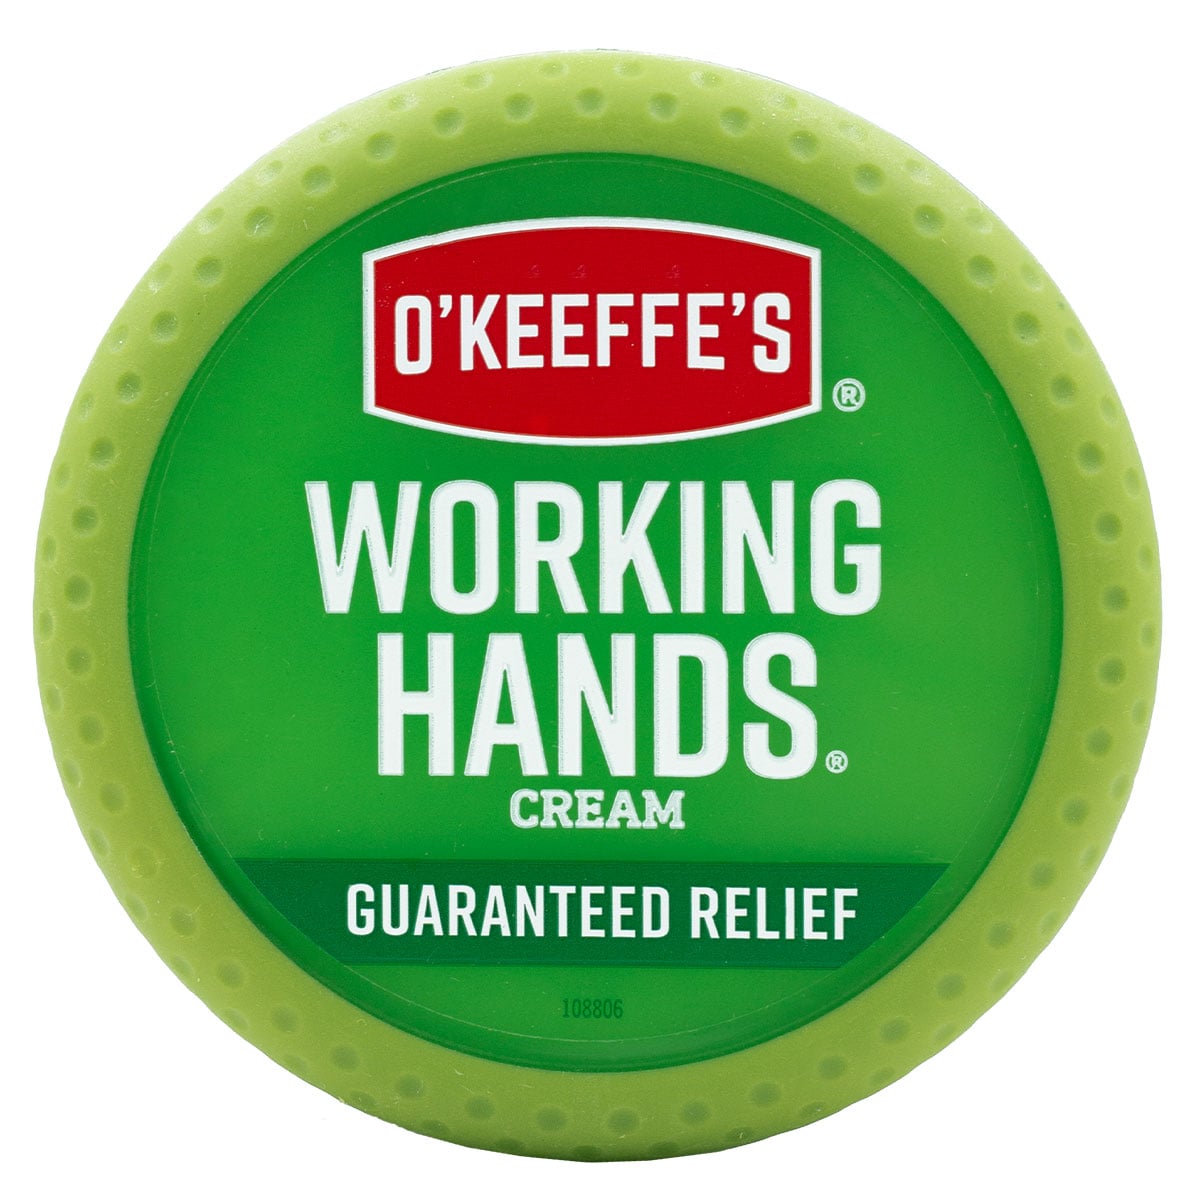 O'Keeffe's Working Hands Jar 76g